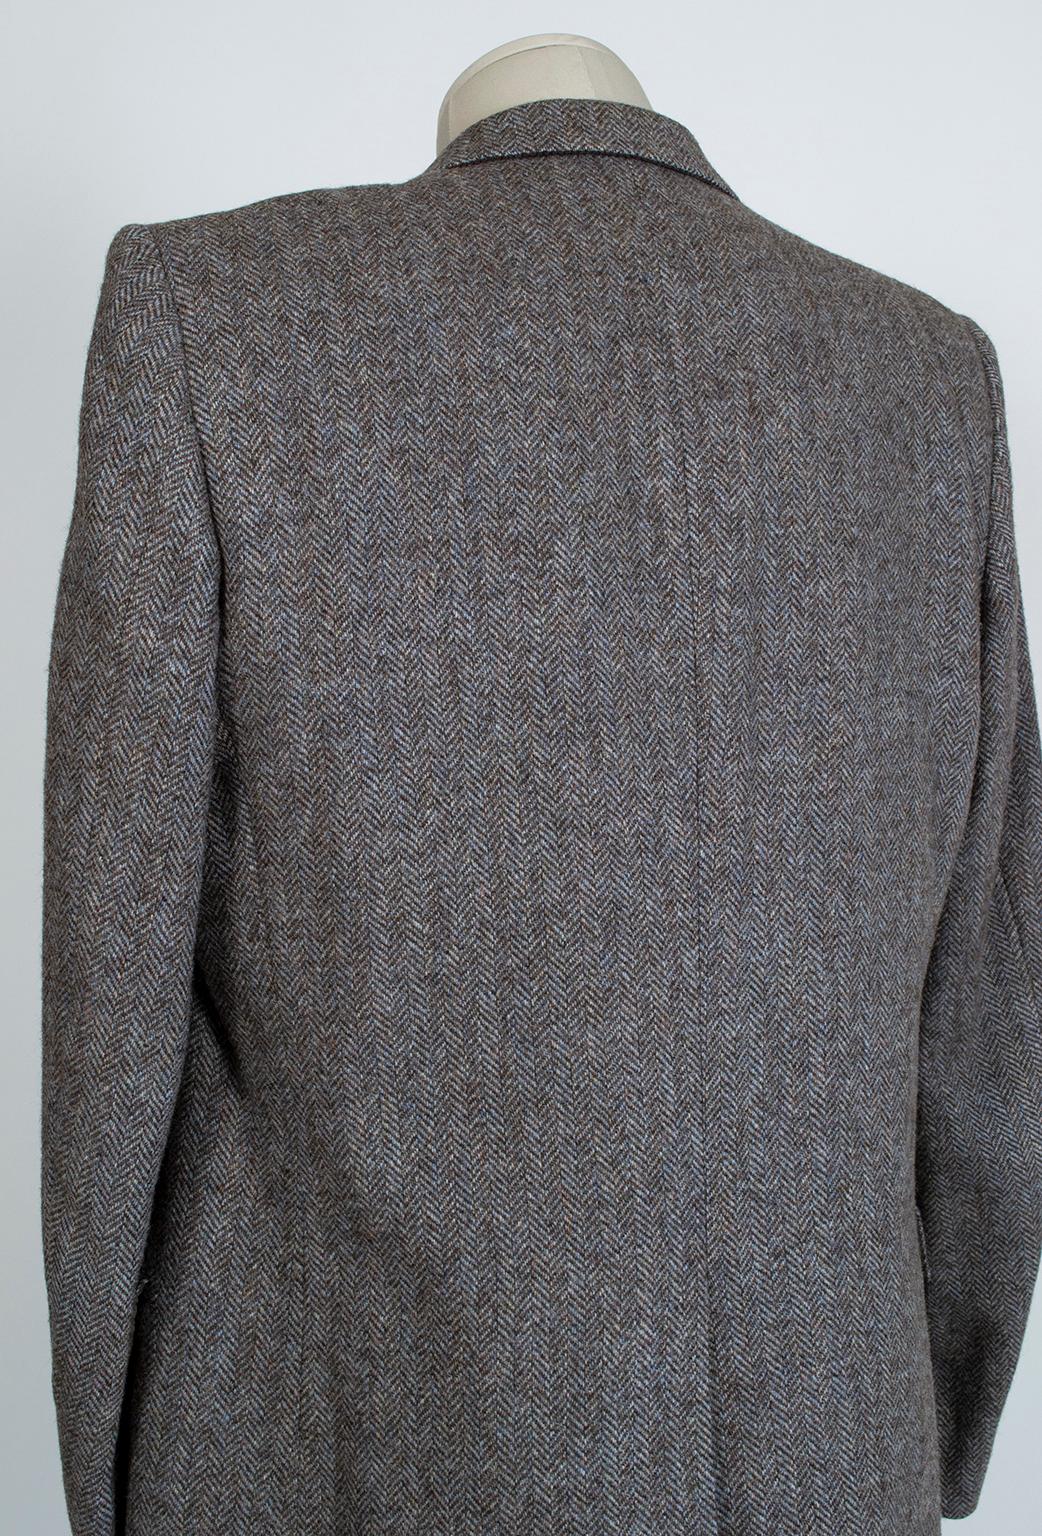 Men's Men’s Christian Dior 2-Button Gray-Blue Herringbone Sport Jacket- 42-44 L, 1970s